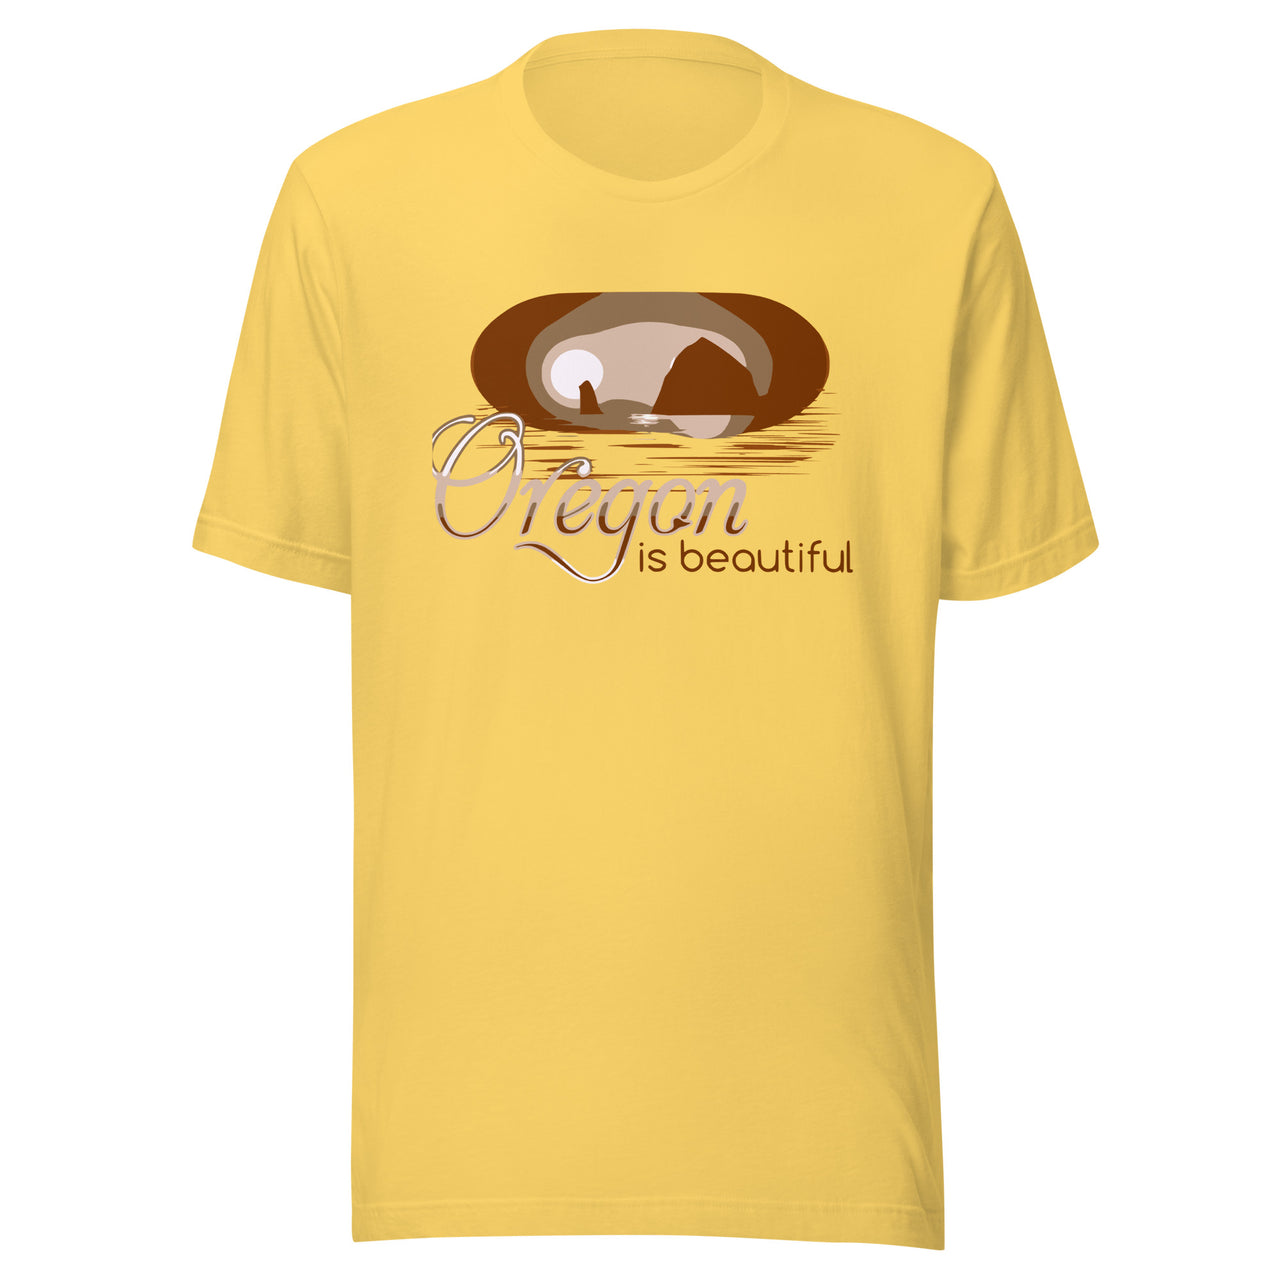 Oregon is Beautiful/Haystack Rock - Unisex t-shirt